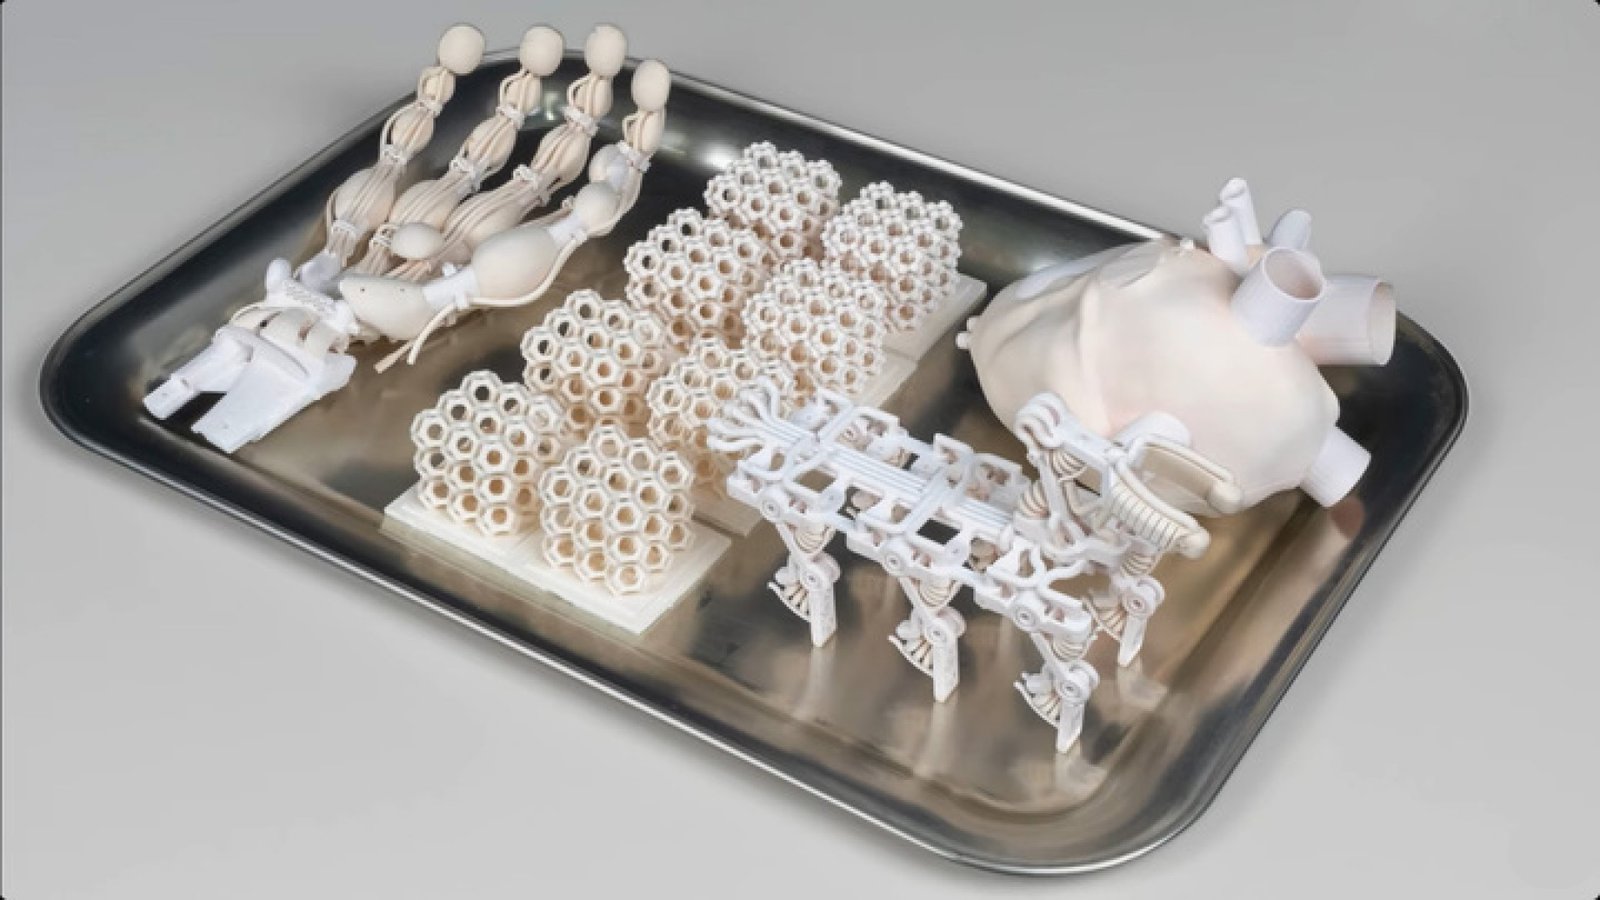 MIT's groundbreaking autonomous 3D printer